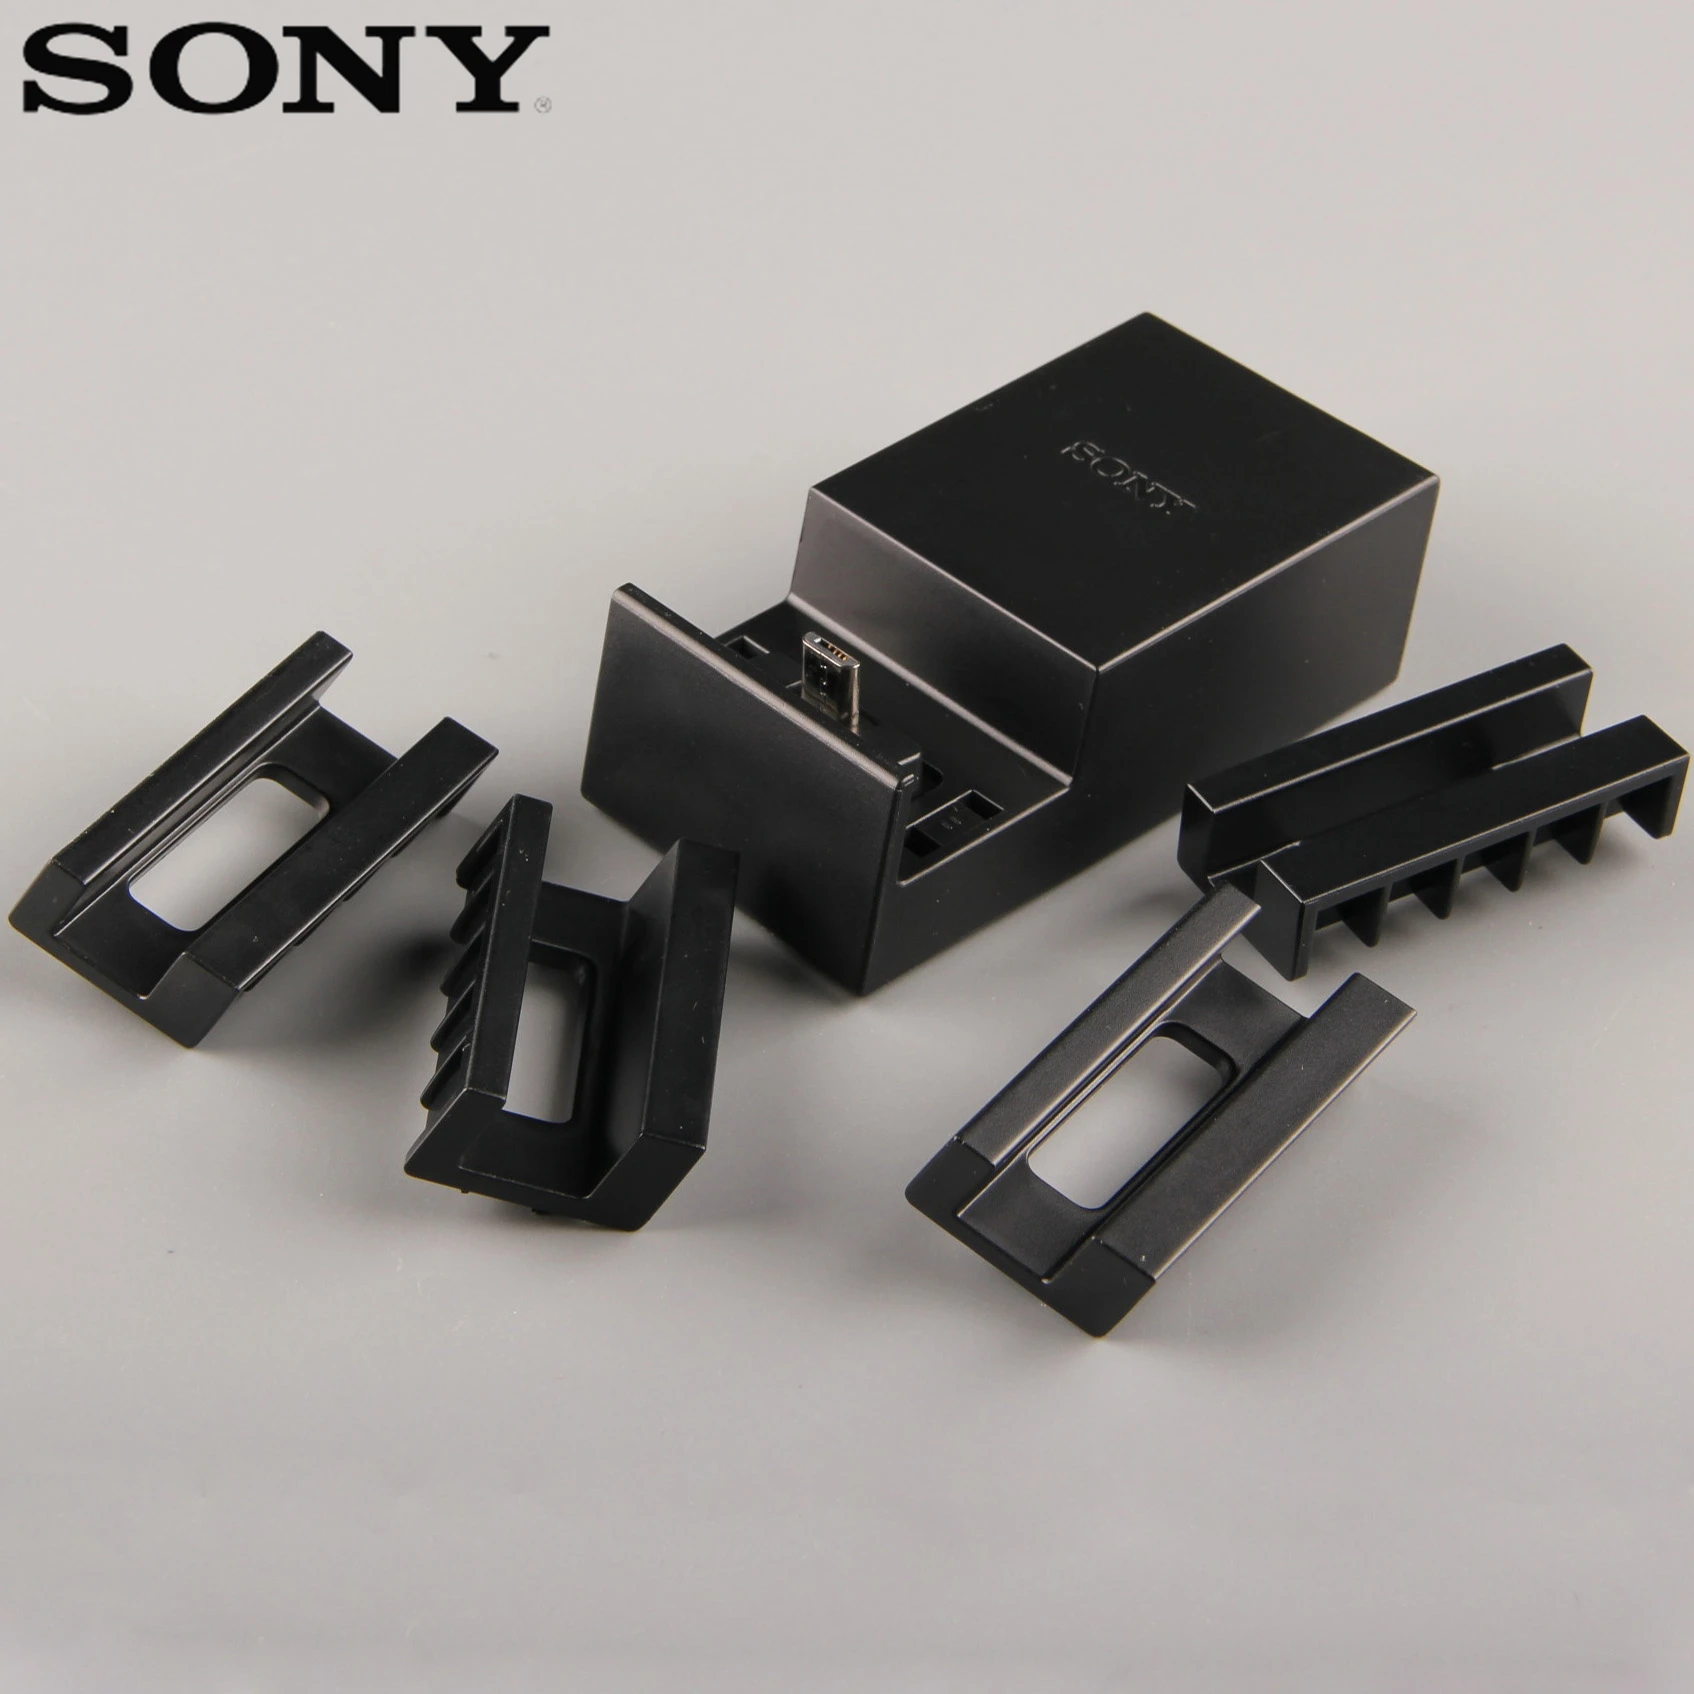 Originál Sony Stojan Nabíjačku Ploche Nabíjací Dok DK55 Pre SONY Xperia Z5 E6883 Z5C Z5 mini E5823 Z5 kompaktný